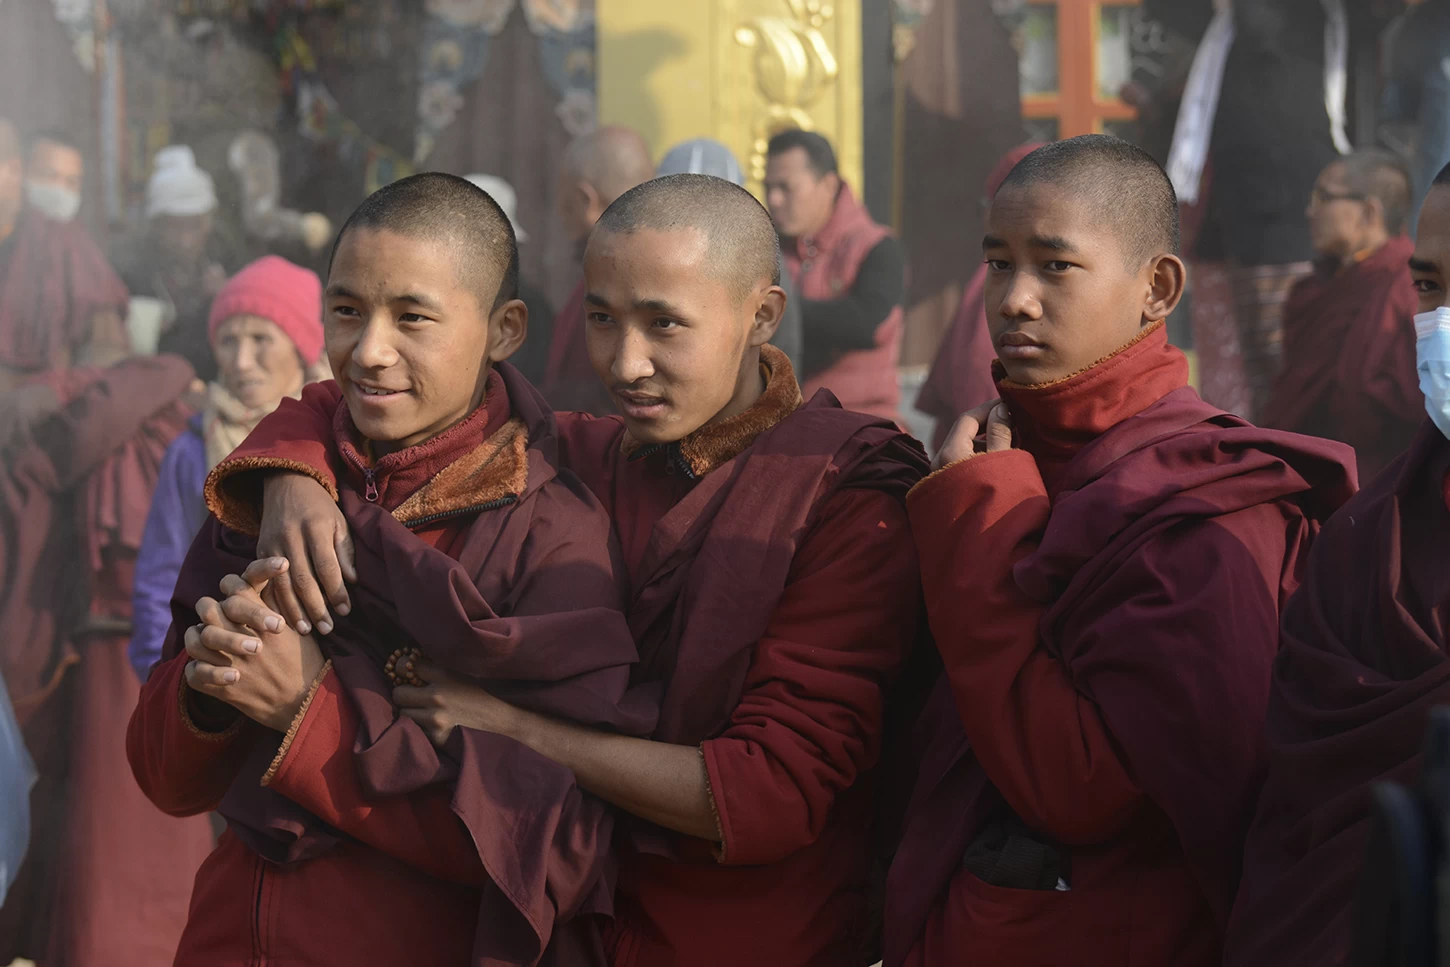  Monks at Boudha Stupa. 